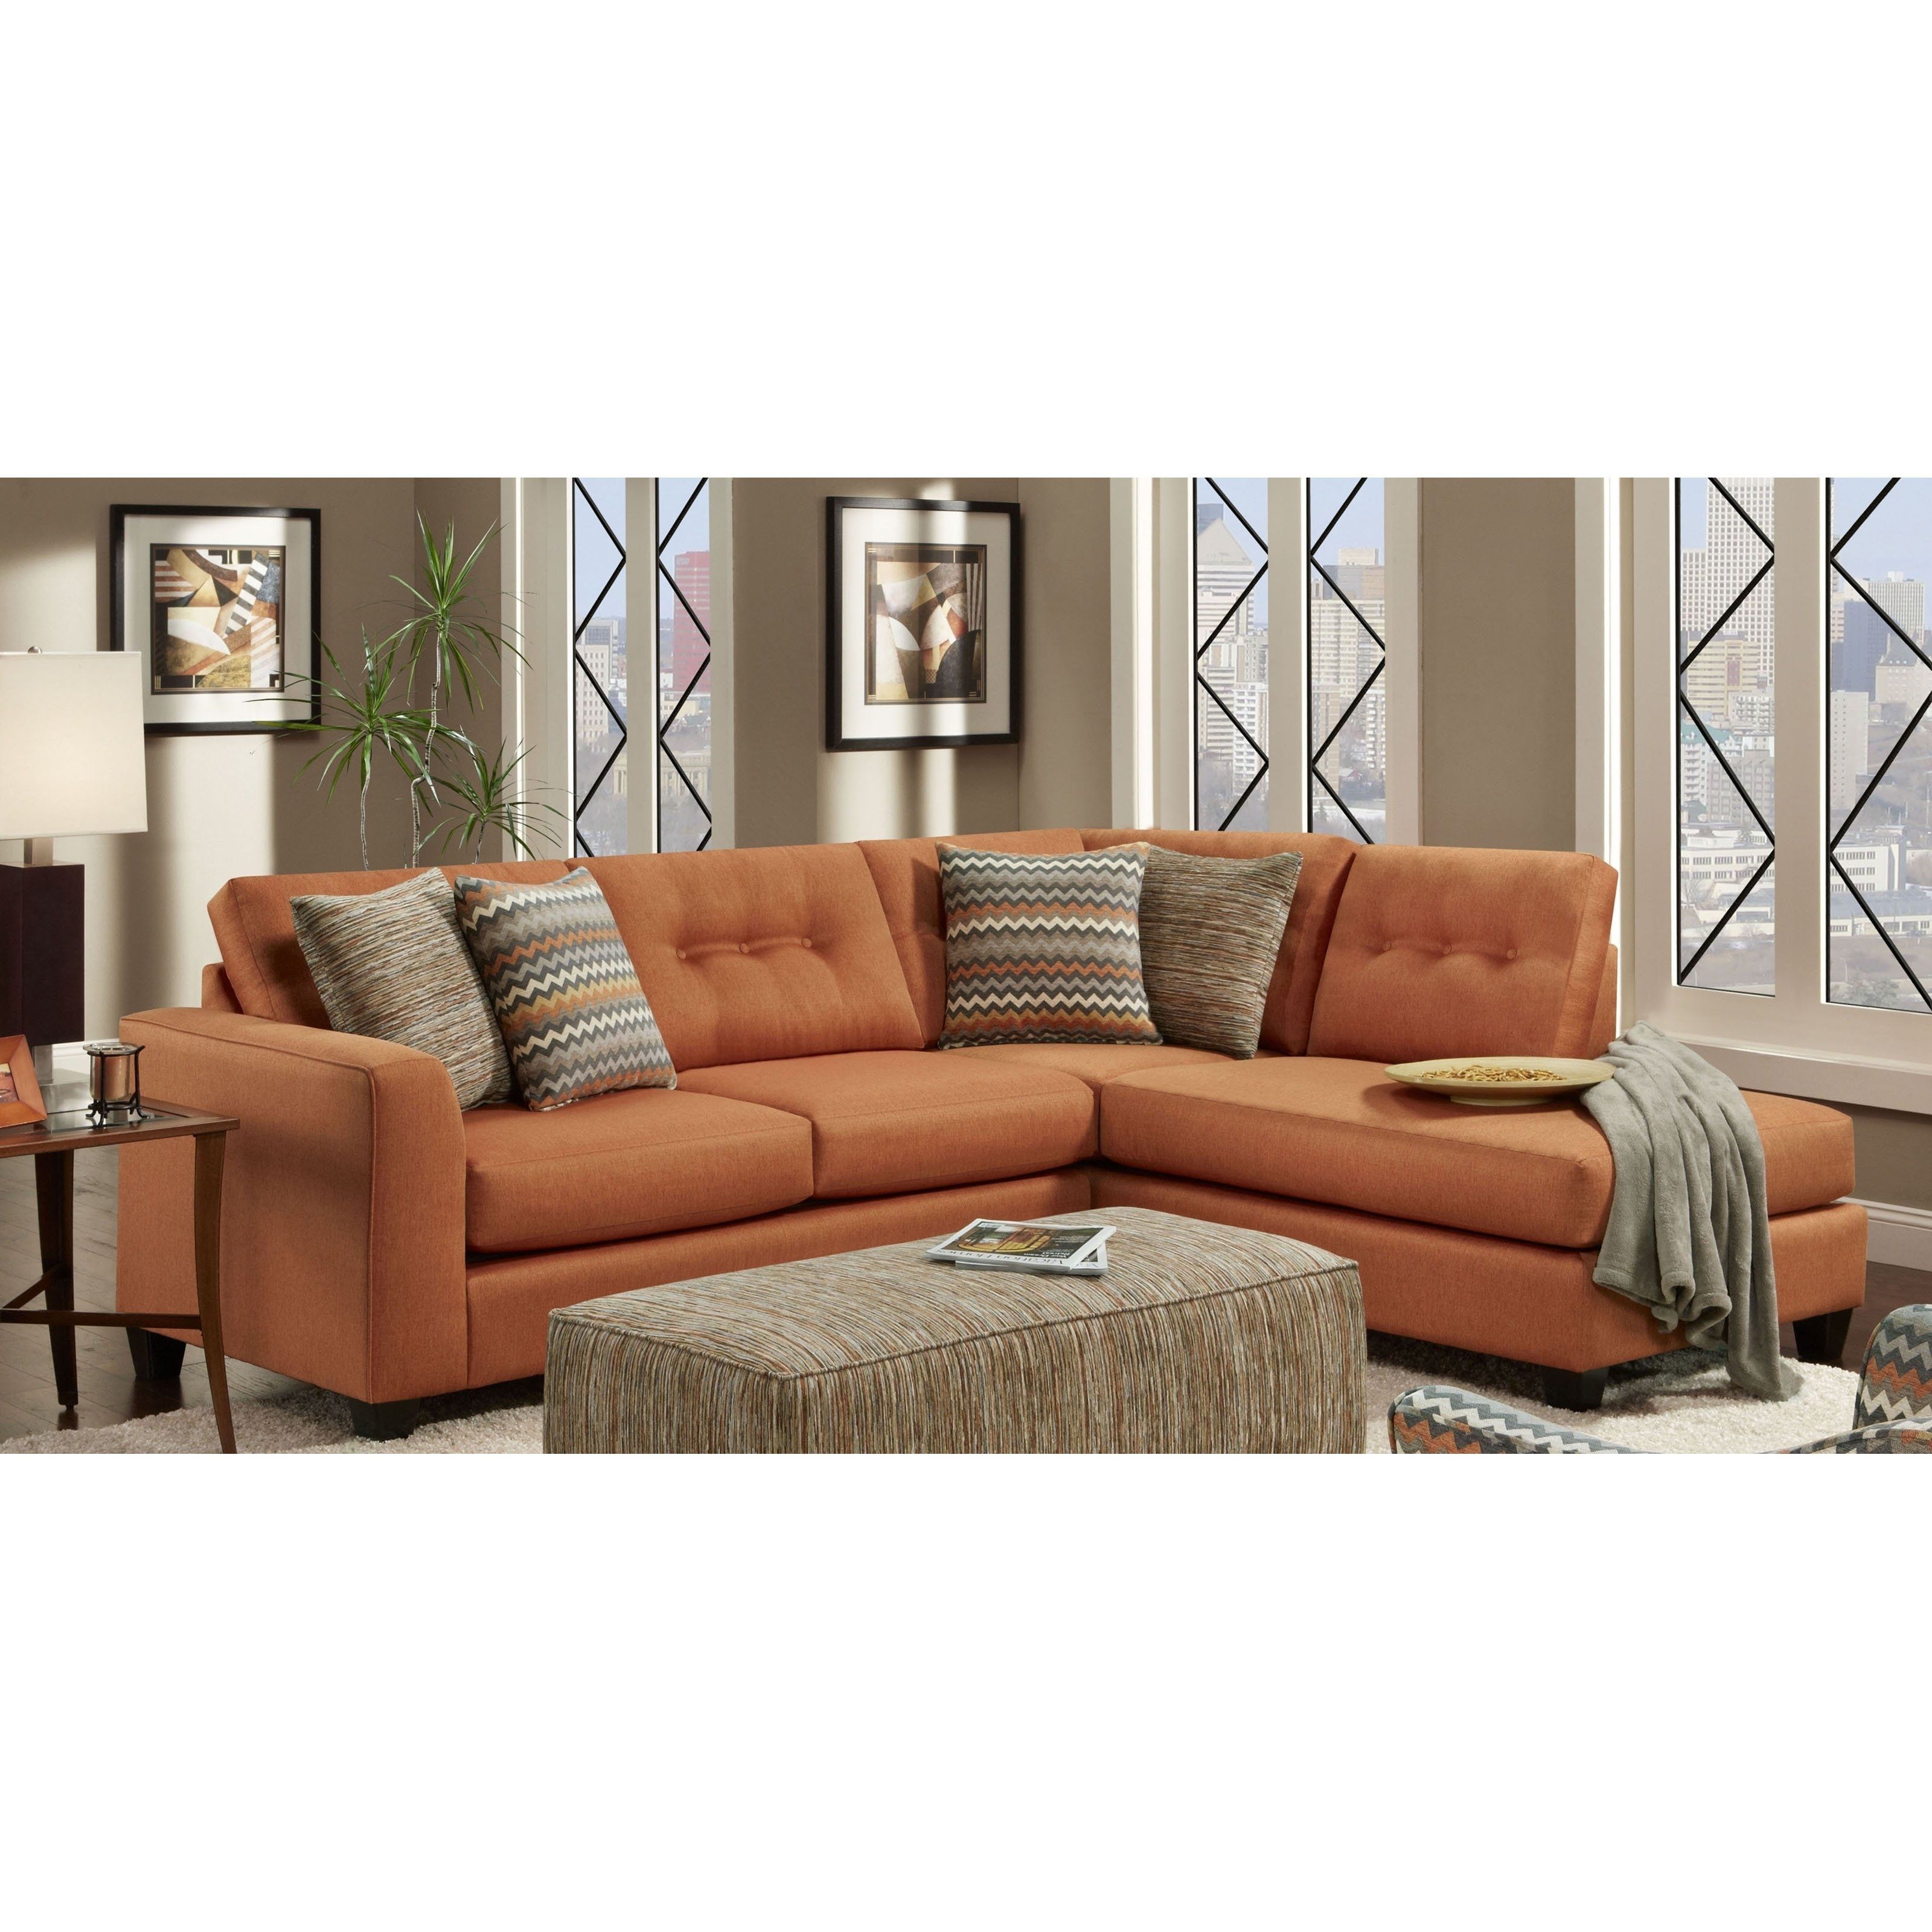 Chelsea Home Furniture Phoenix Sectional Sofa – Walmart Throughout Phoenix Sectional Sofas (View 6 of 10)